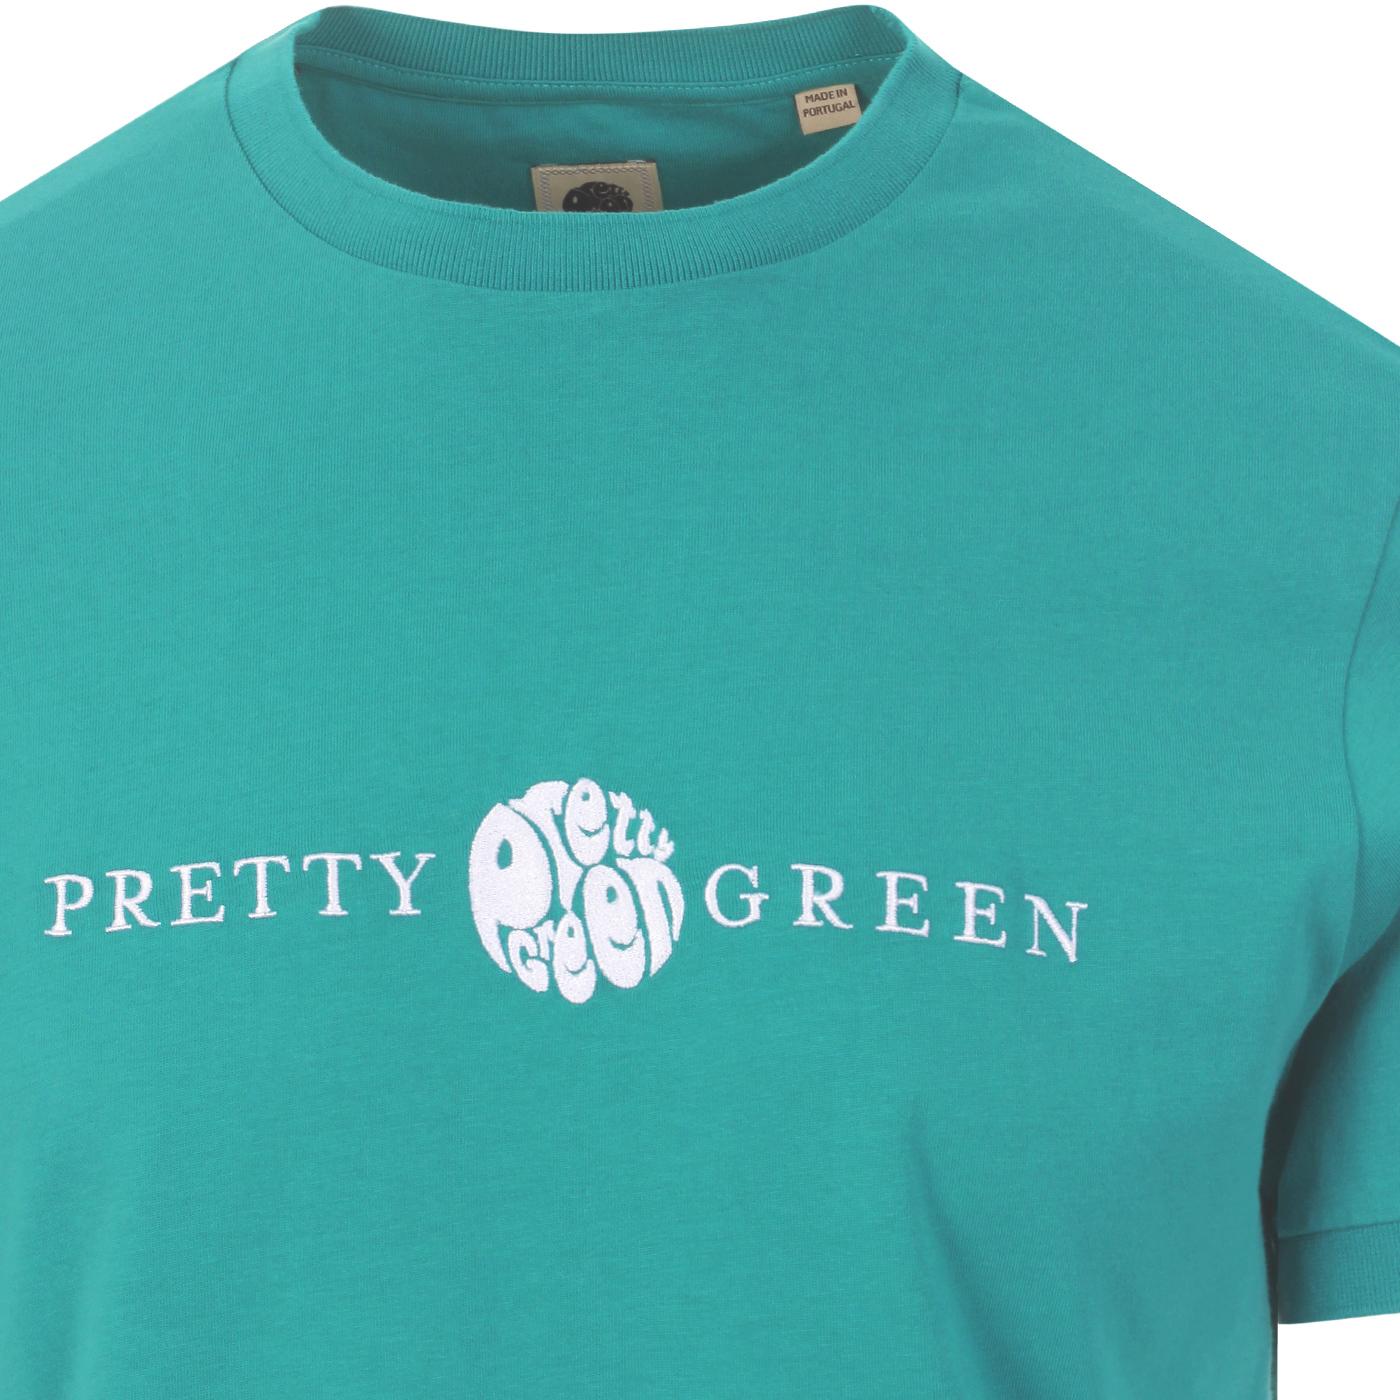 PRETTY GREEN Men's Retro Embroidered Logo Tee in Green